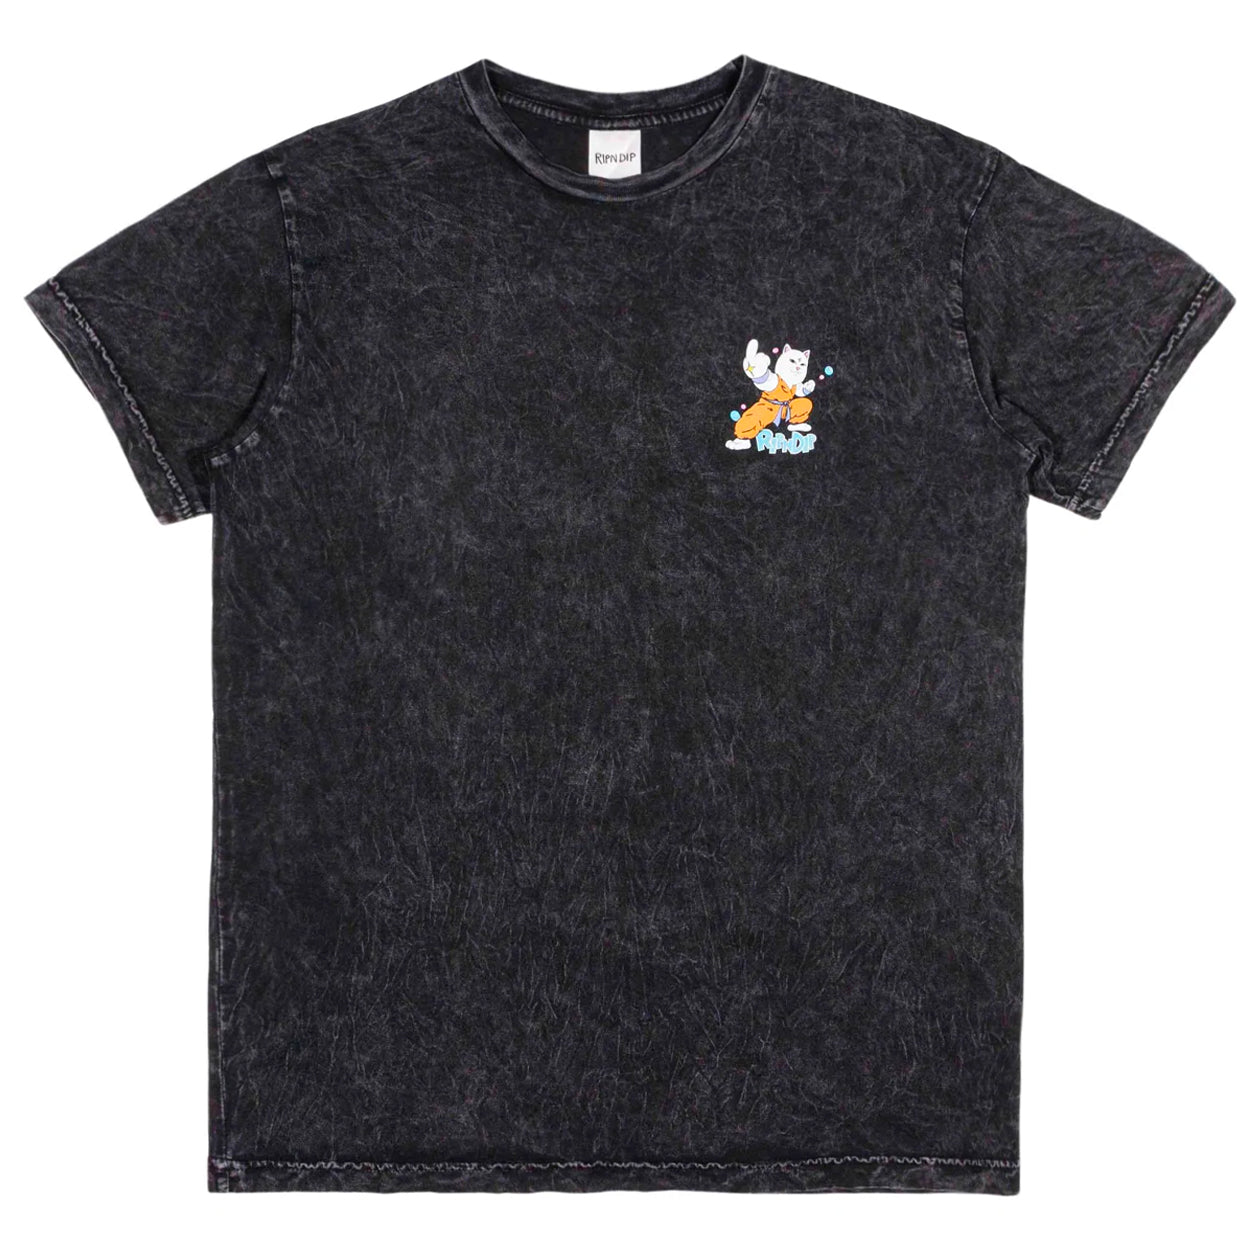 RIPNDIP - Power T-Shirt - Black Mineral Wash - Prime Delux Store